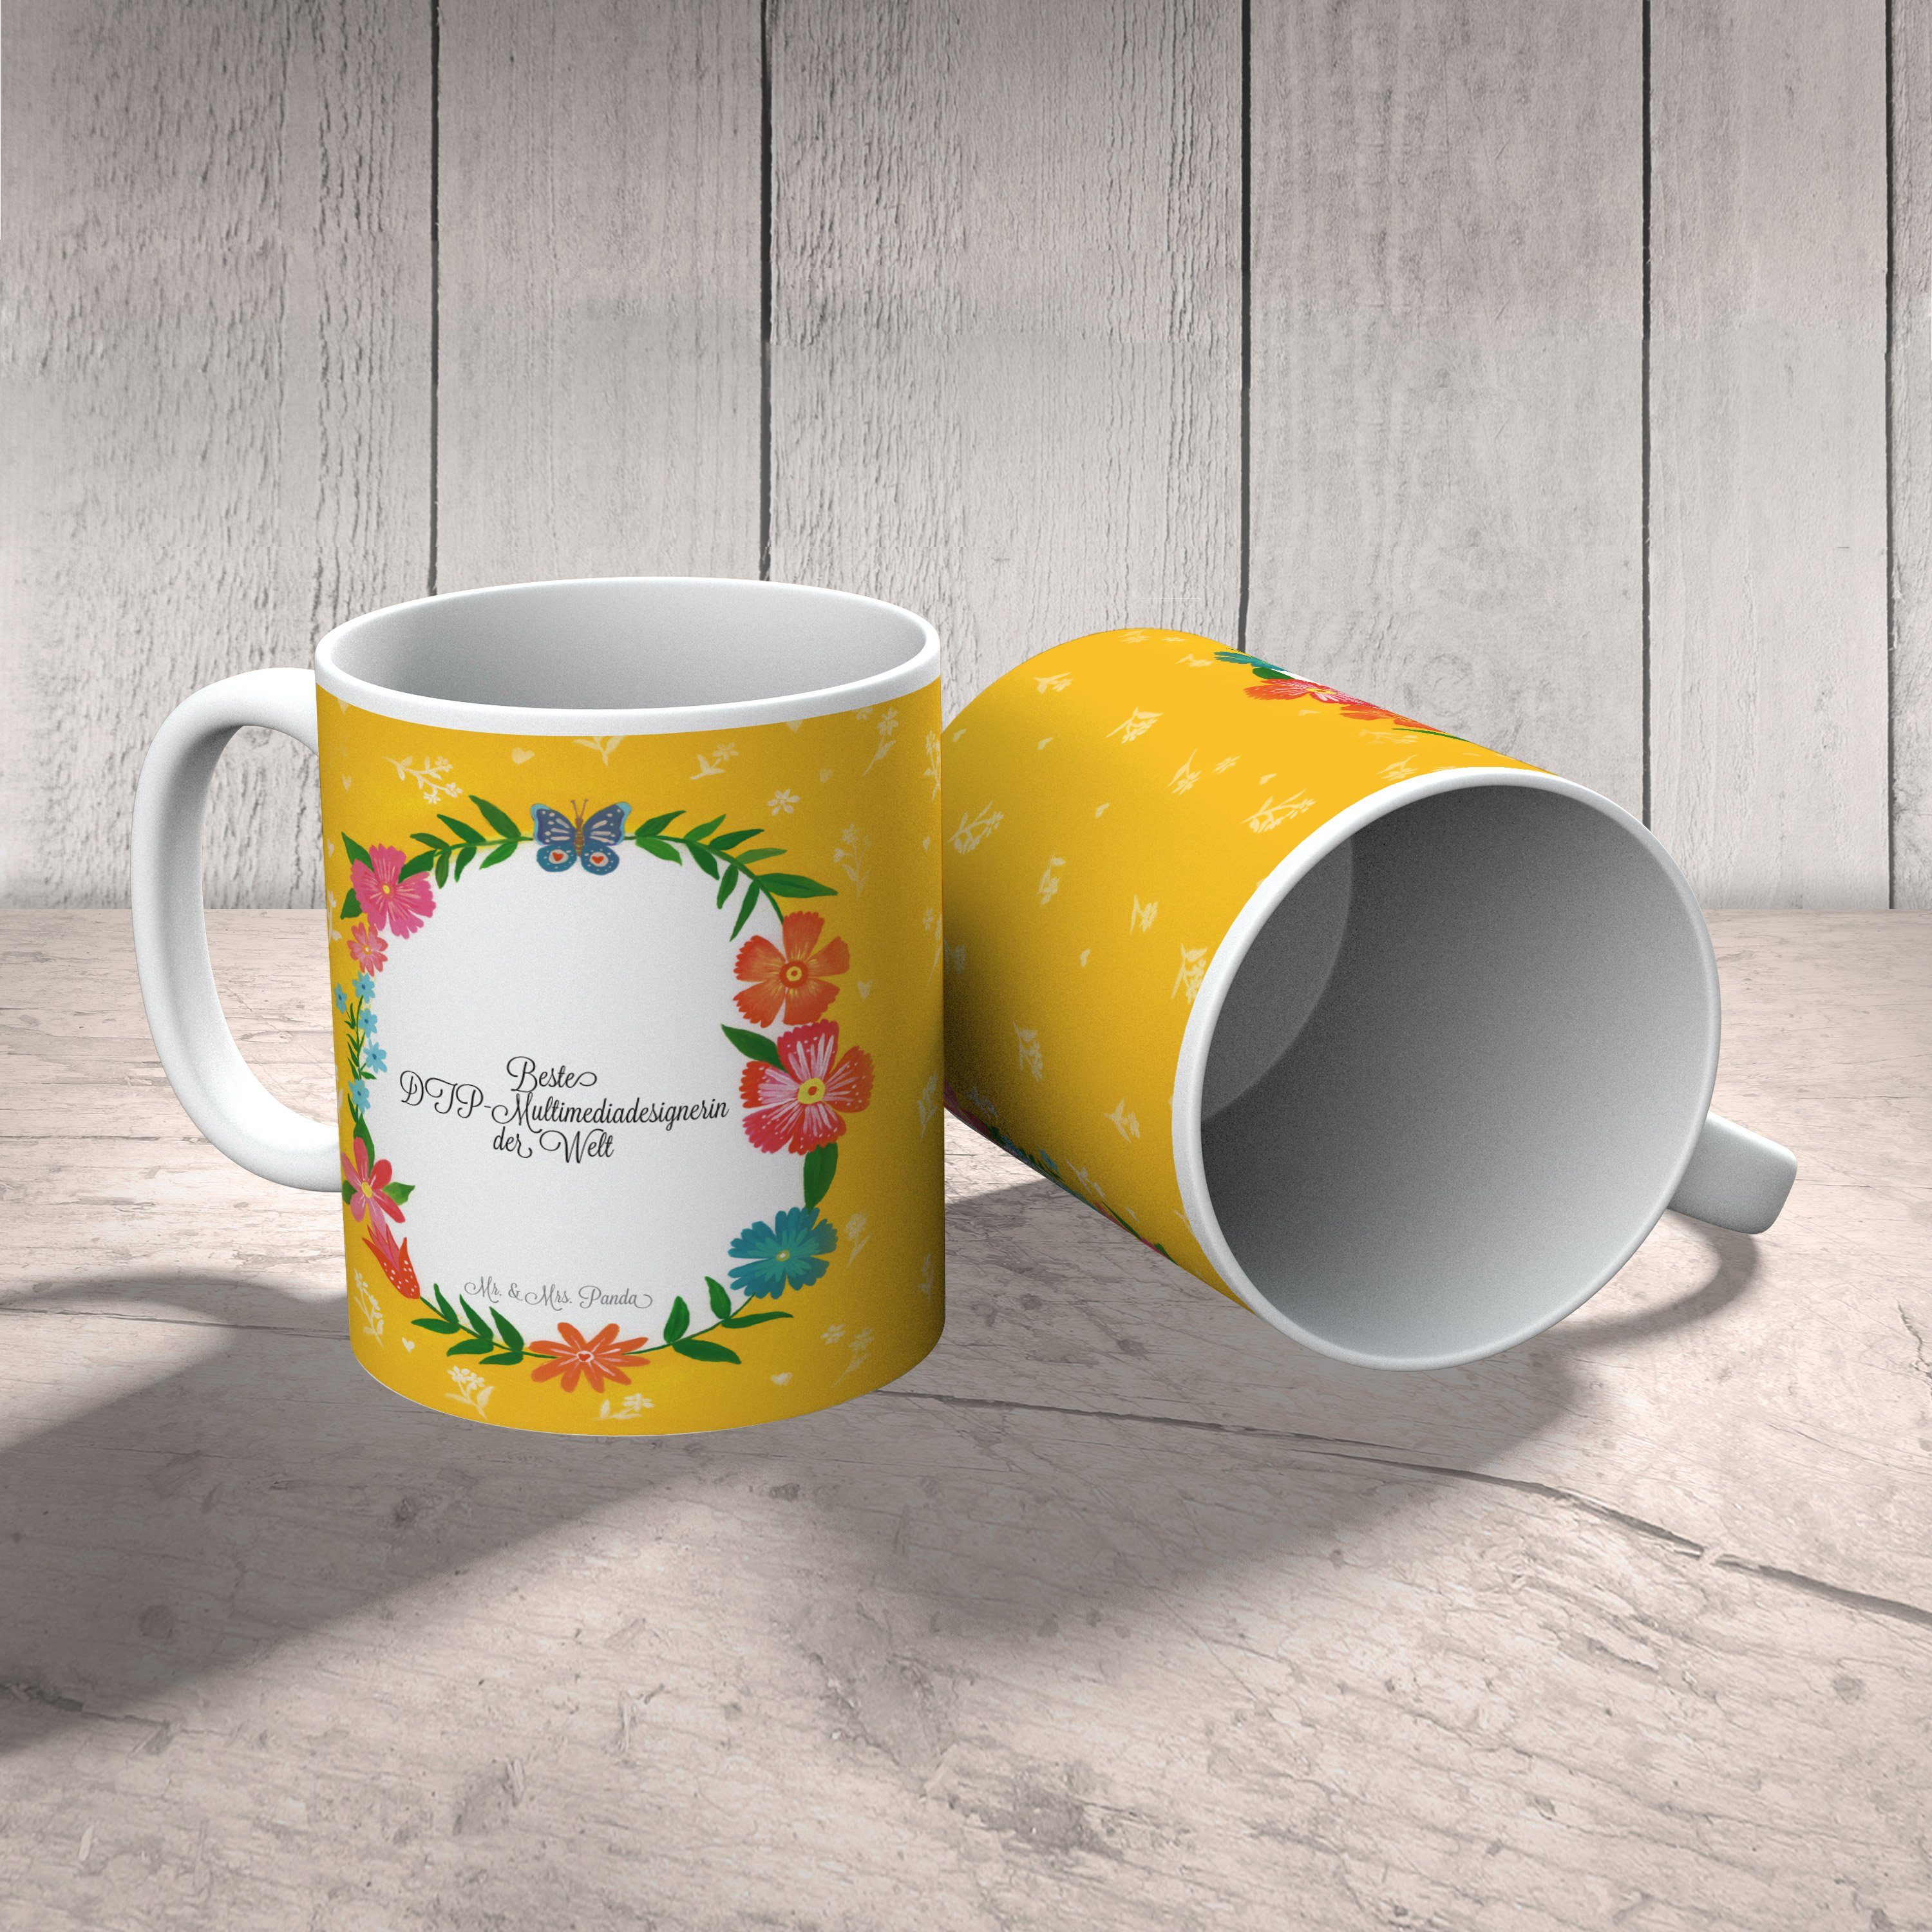 Panda - Tasse, Keramik Tasse Geschenk, Ausbildung, Mr. Mrs. Büro DTP-Multimediadesignerin Teetasse, &